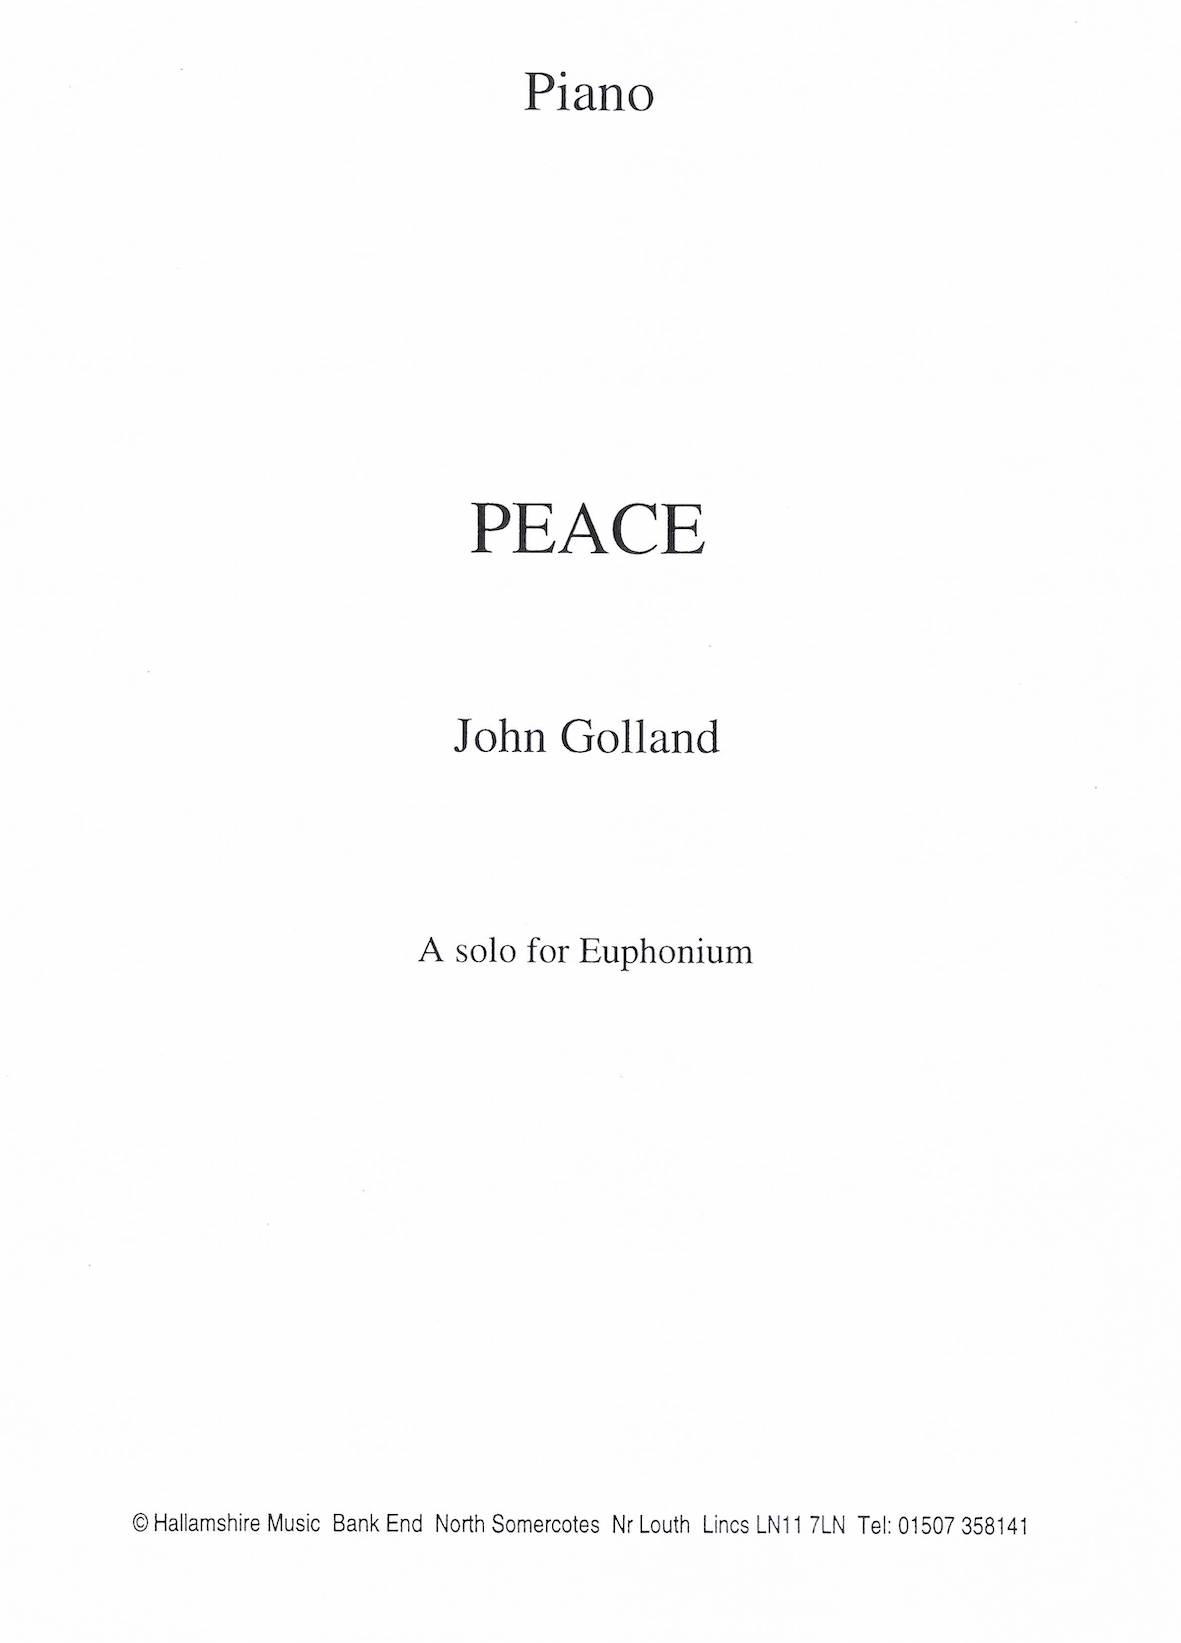 Peace - John Golland - Euphonium or Baritone and Piano